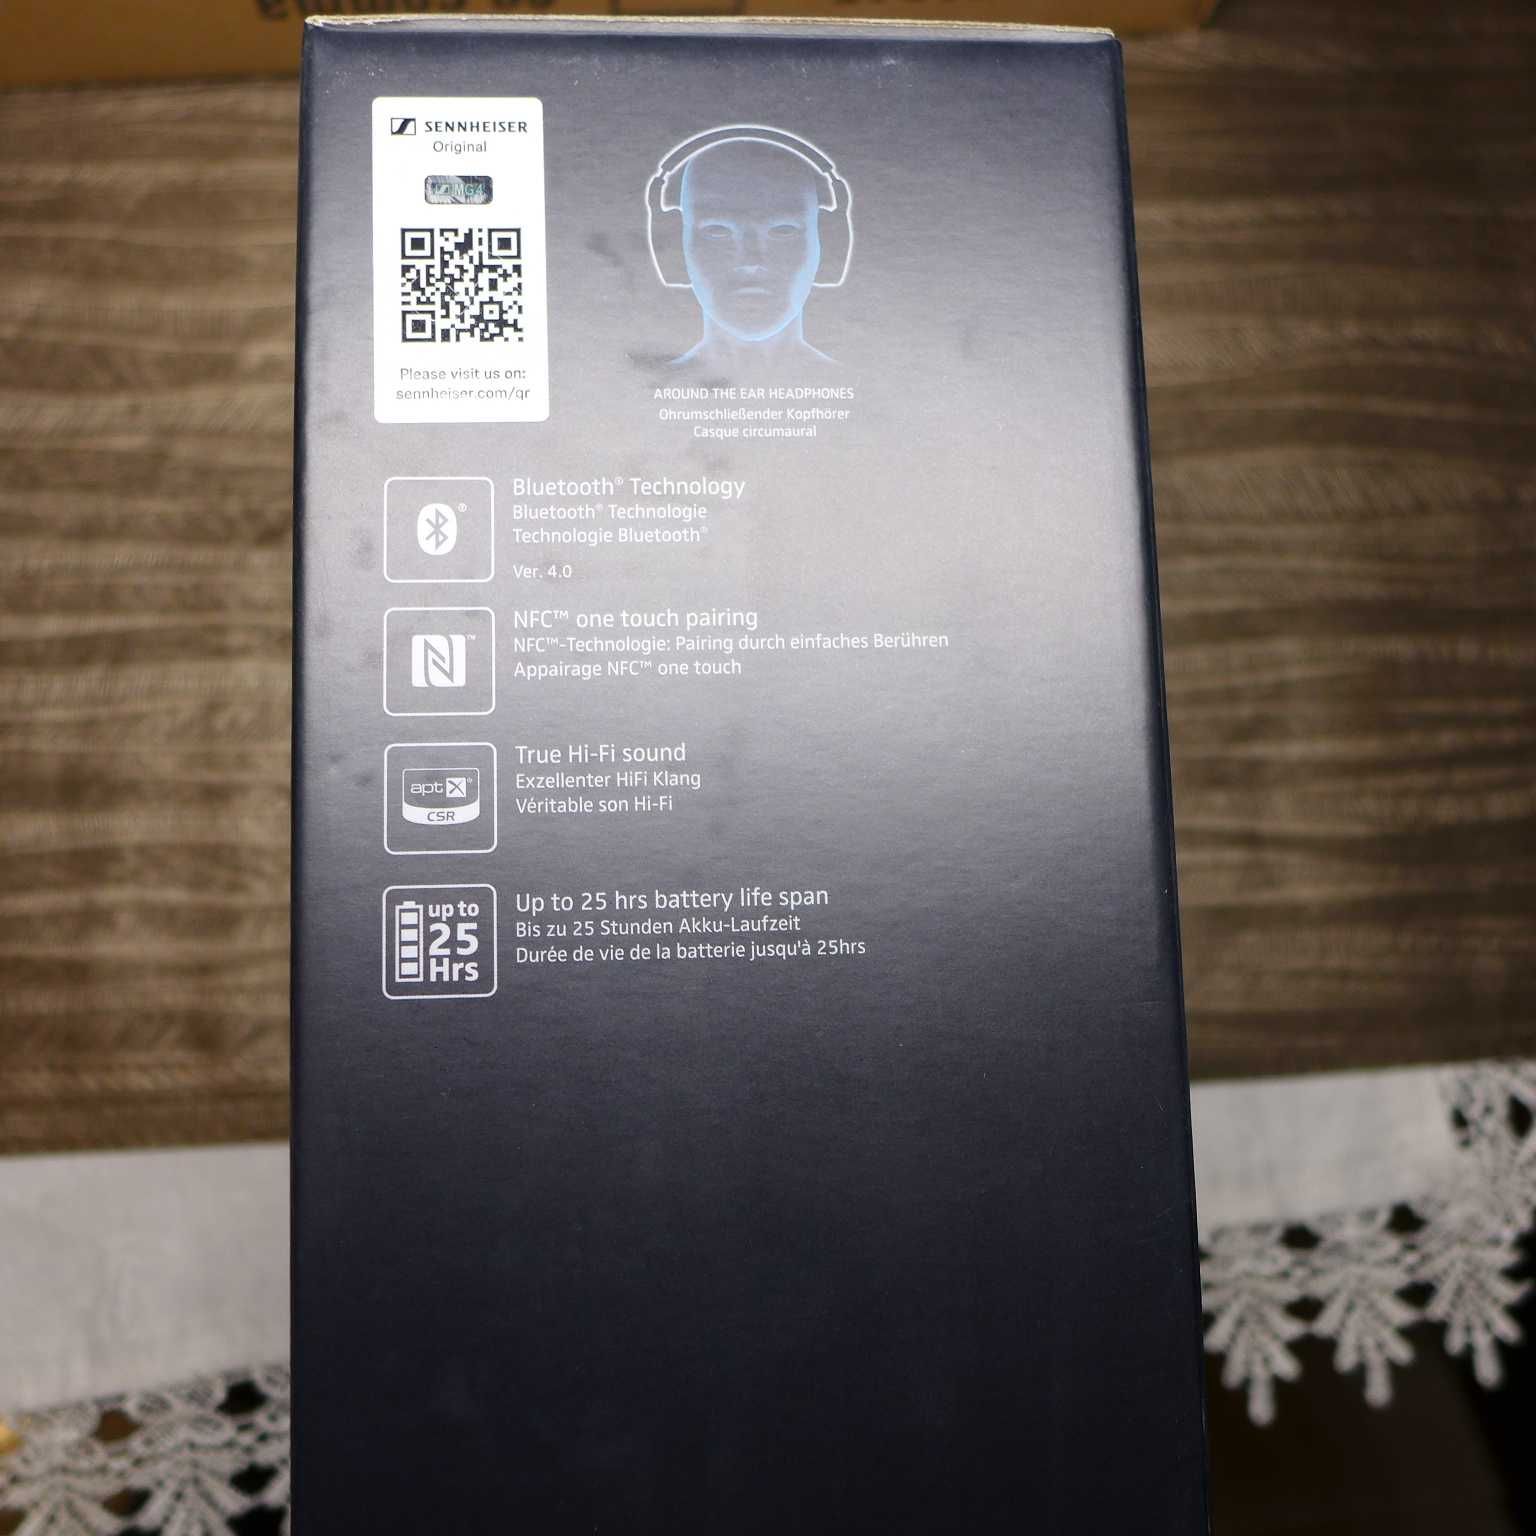 Słuchawki bezprzewodowe Sennheiser HD 4.40 BT